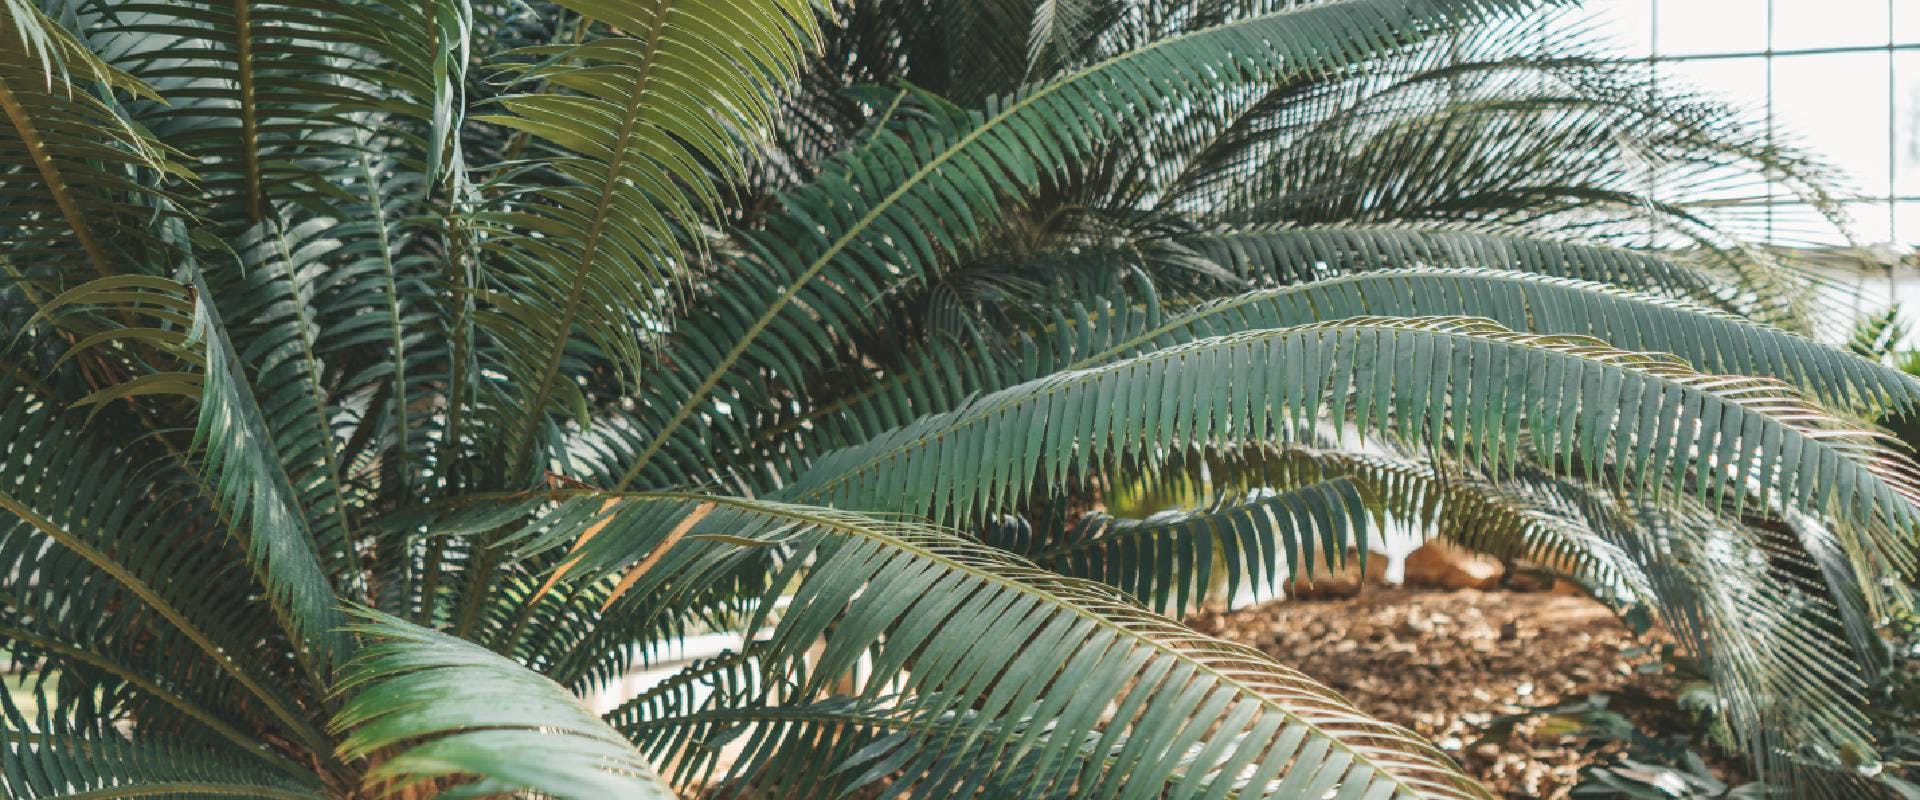 Sago palm plant in a botanical garden